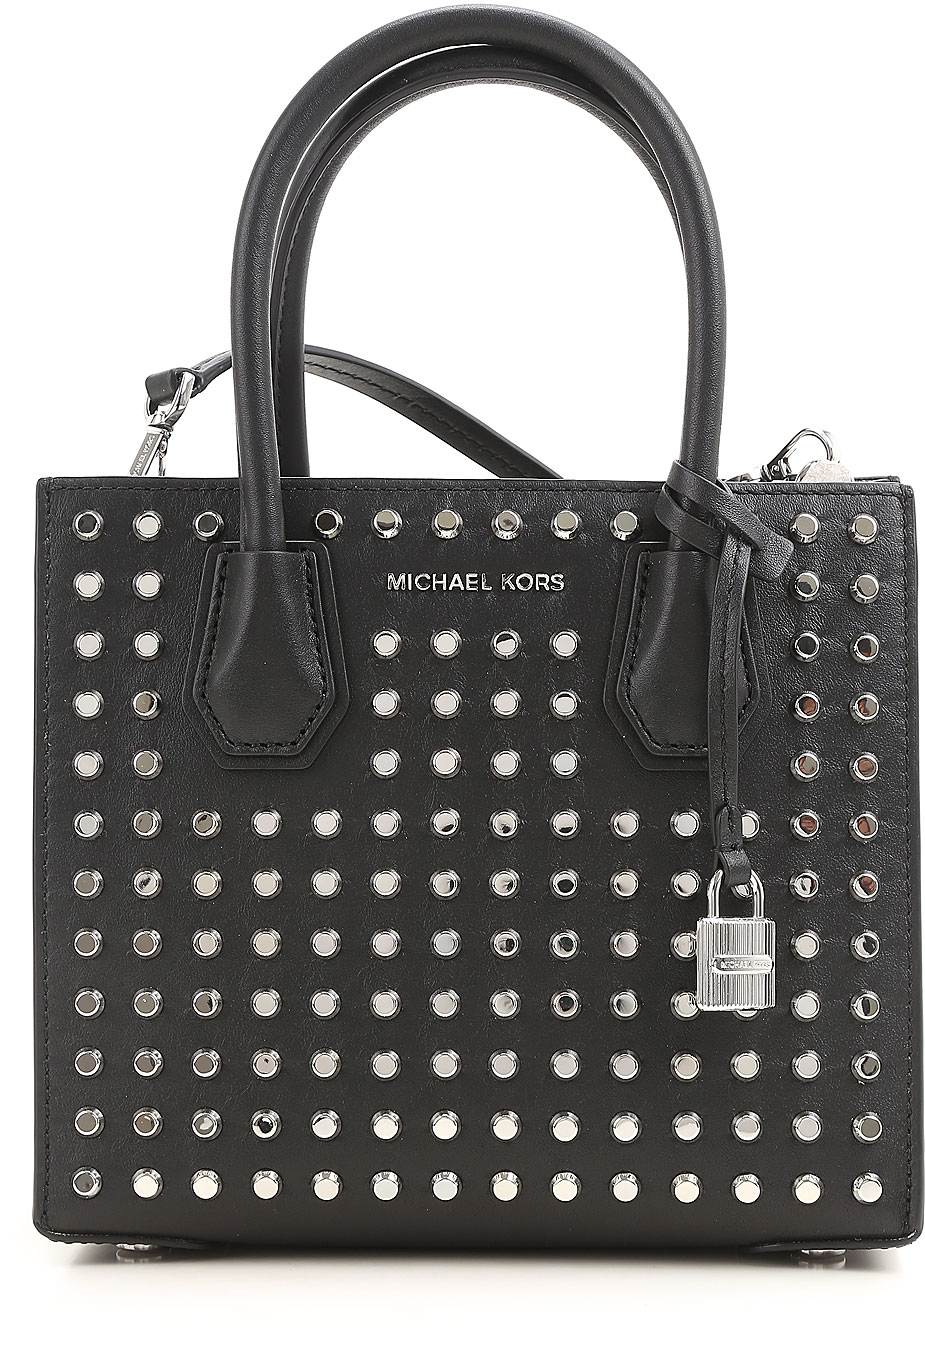 Handbags Michael Kors, Style code: 30s7sz4m2t-001-n978